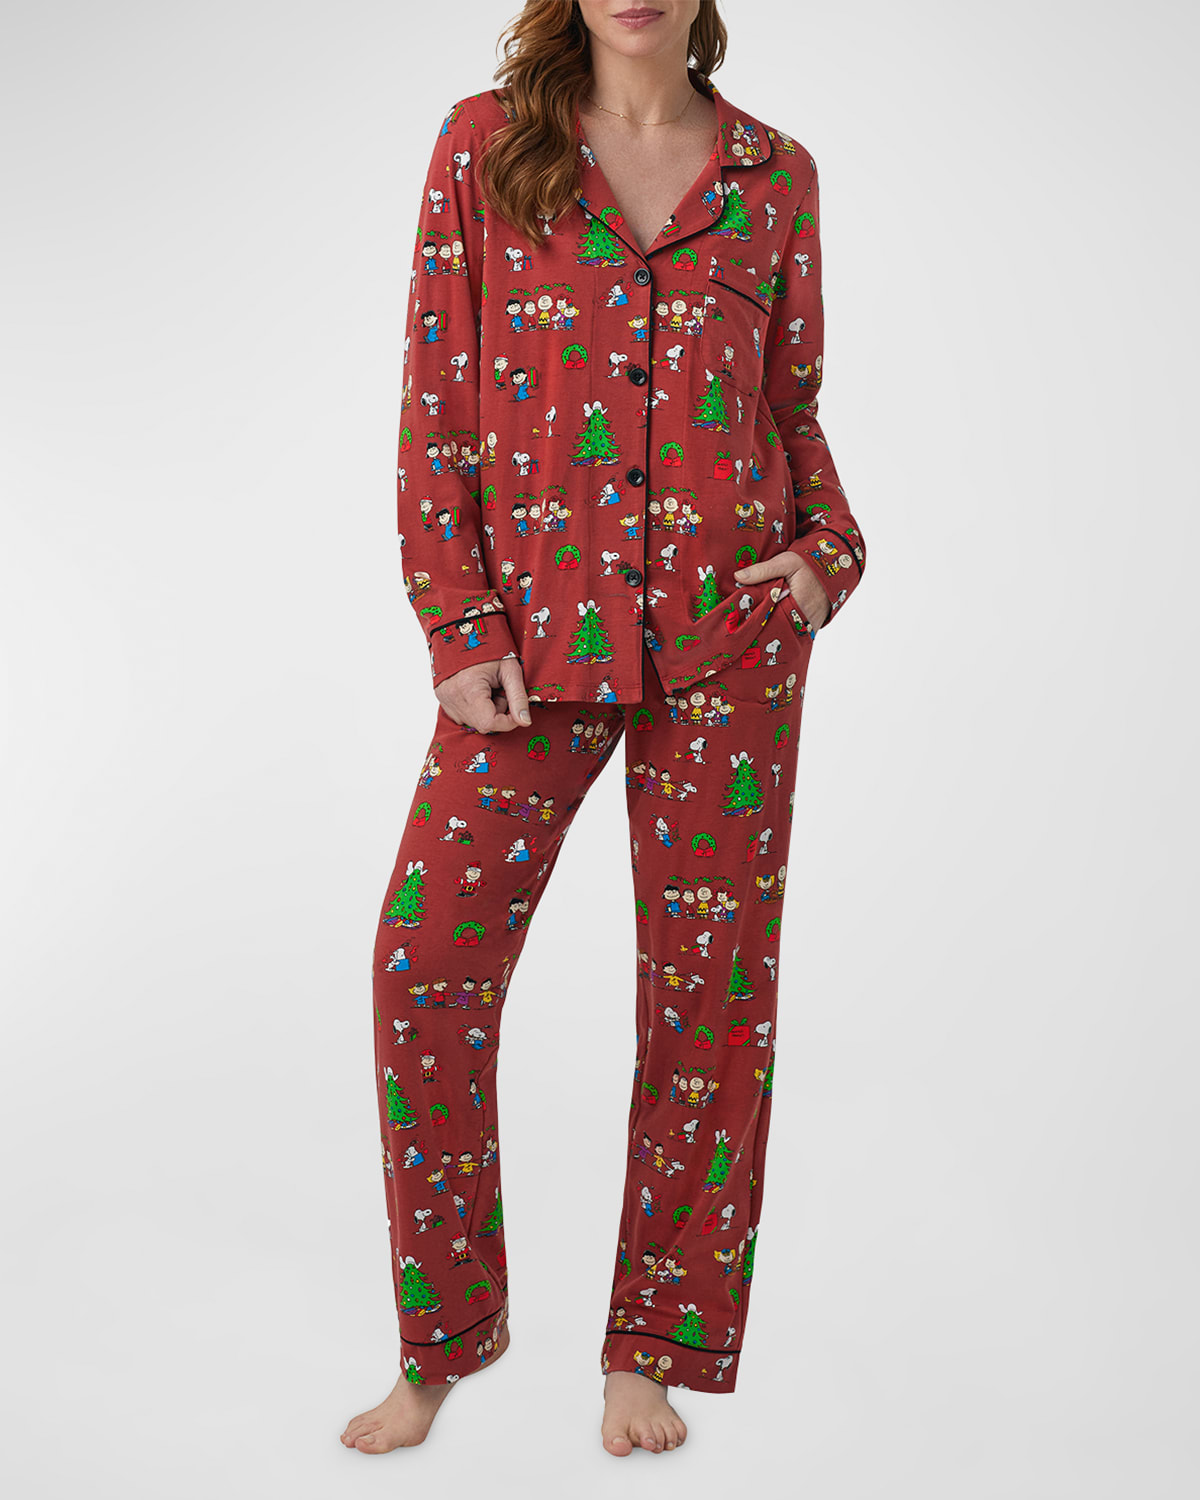 x Peanuts Holiday-Print Cotton Pajama Set